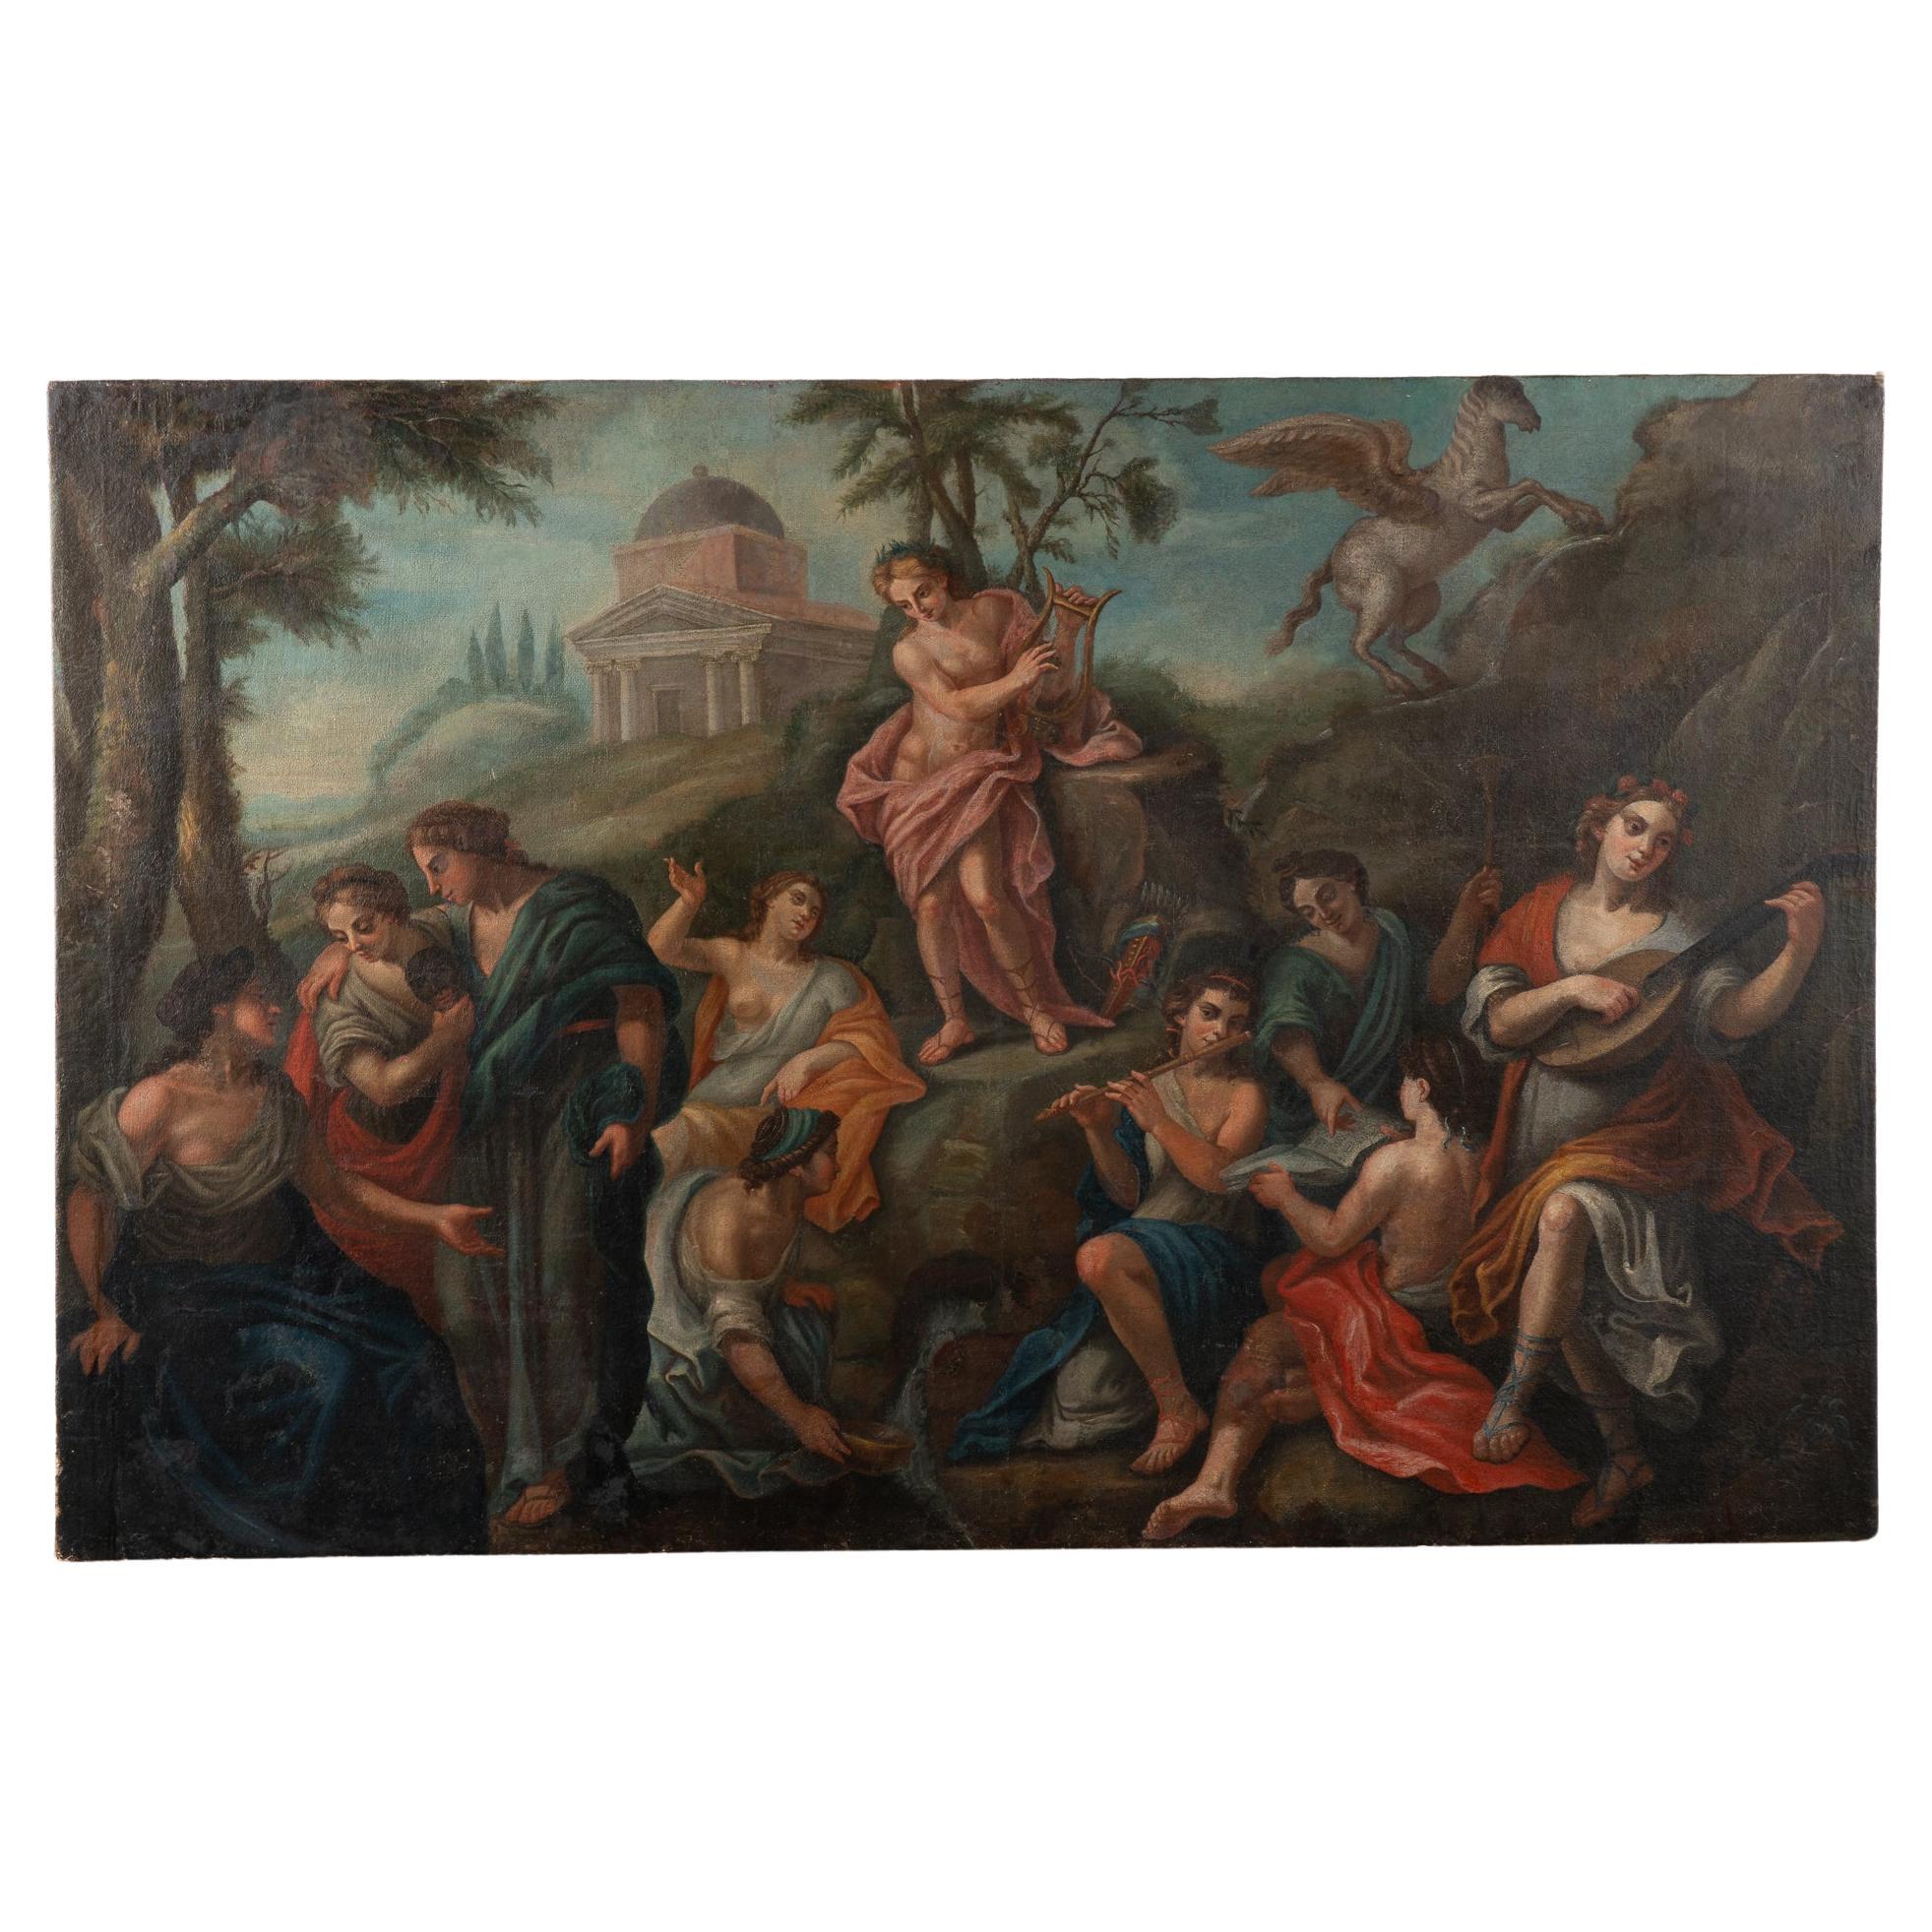 Original Oil On Canvas Large Allegorical Painting, Italian School 1750-1800